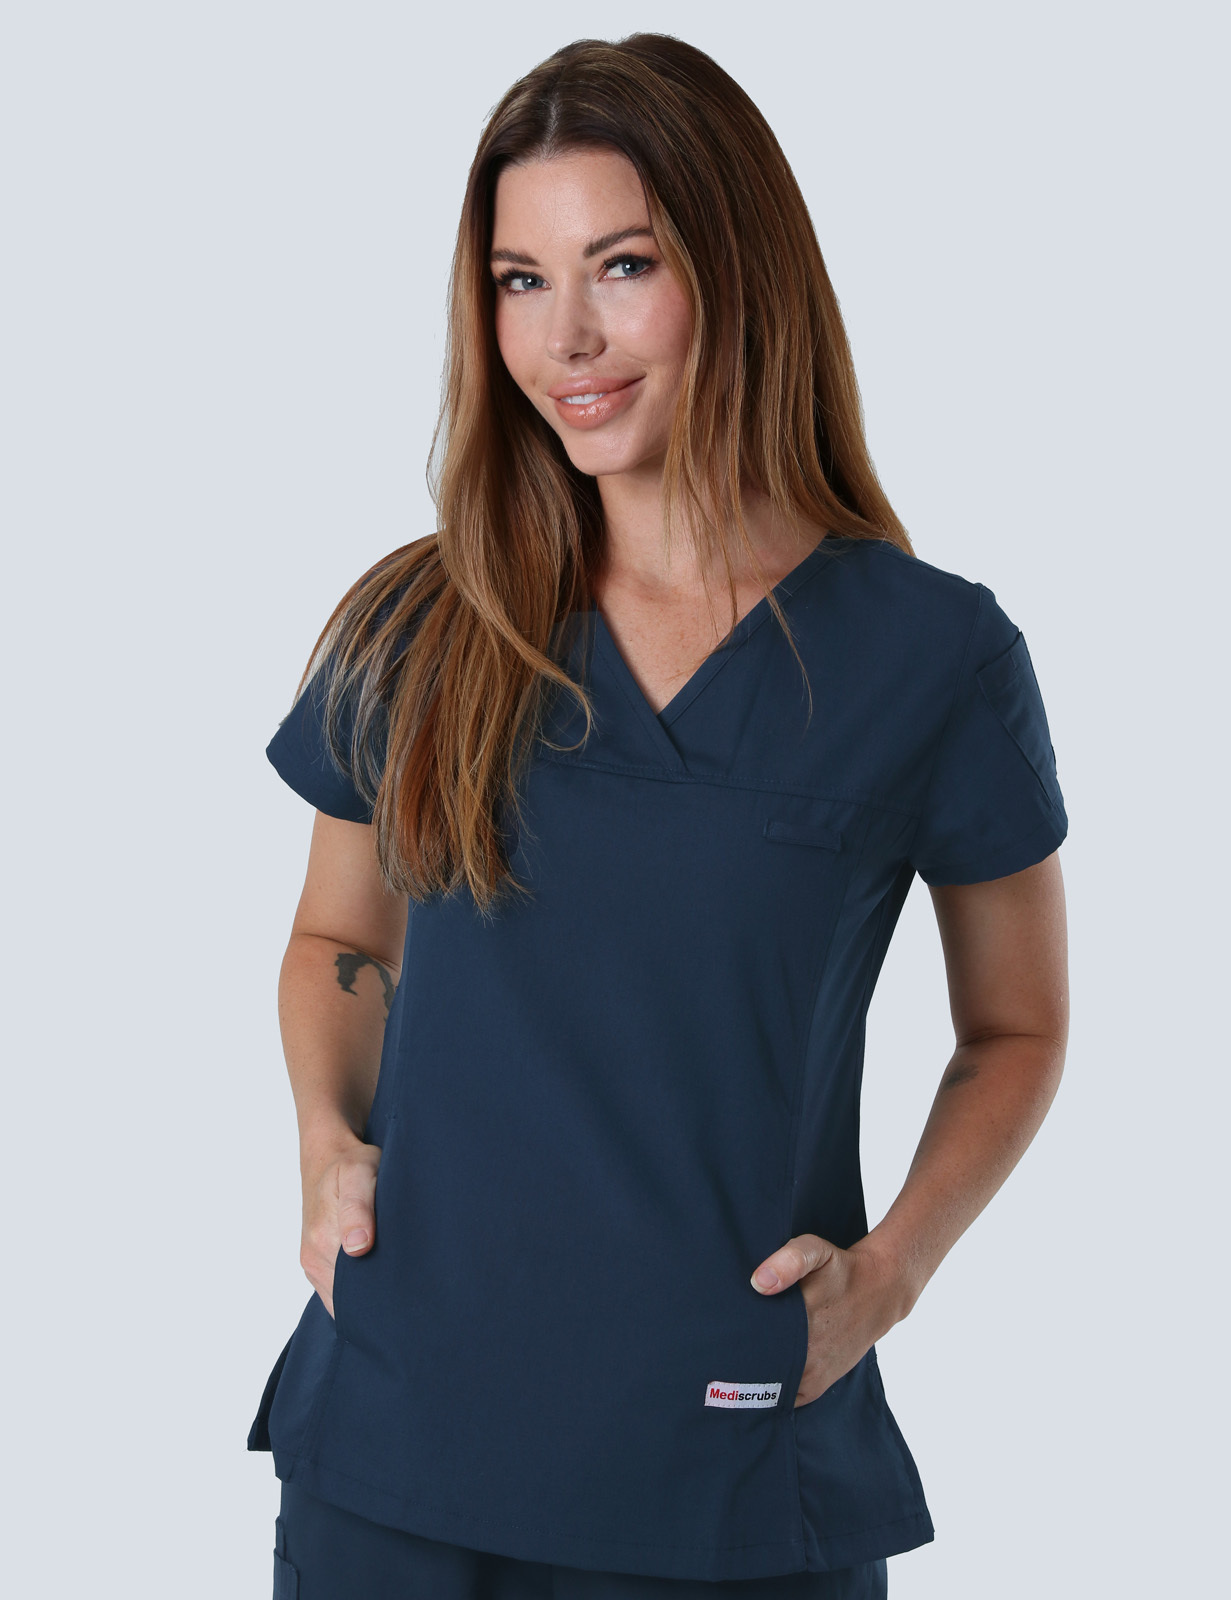 Peninsula Health Frankston - ICU Nurse (Women's Fit Solid Scrub Top and Cargo Pants in Navy incl Logos)